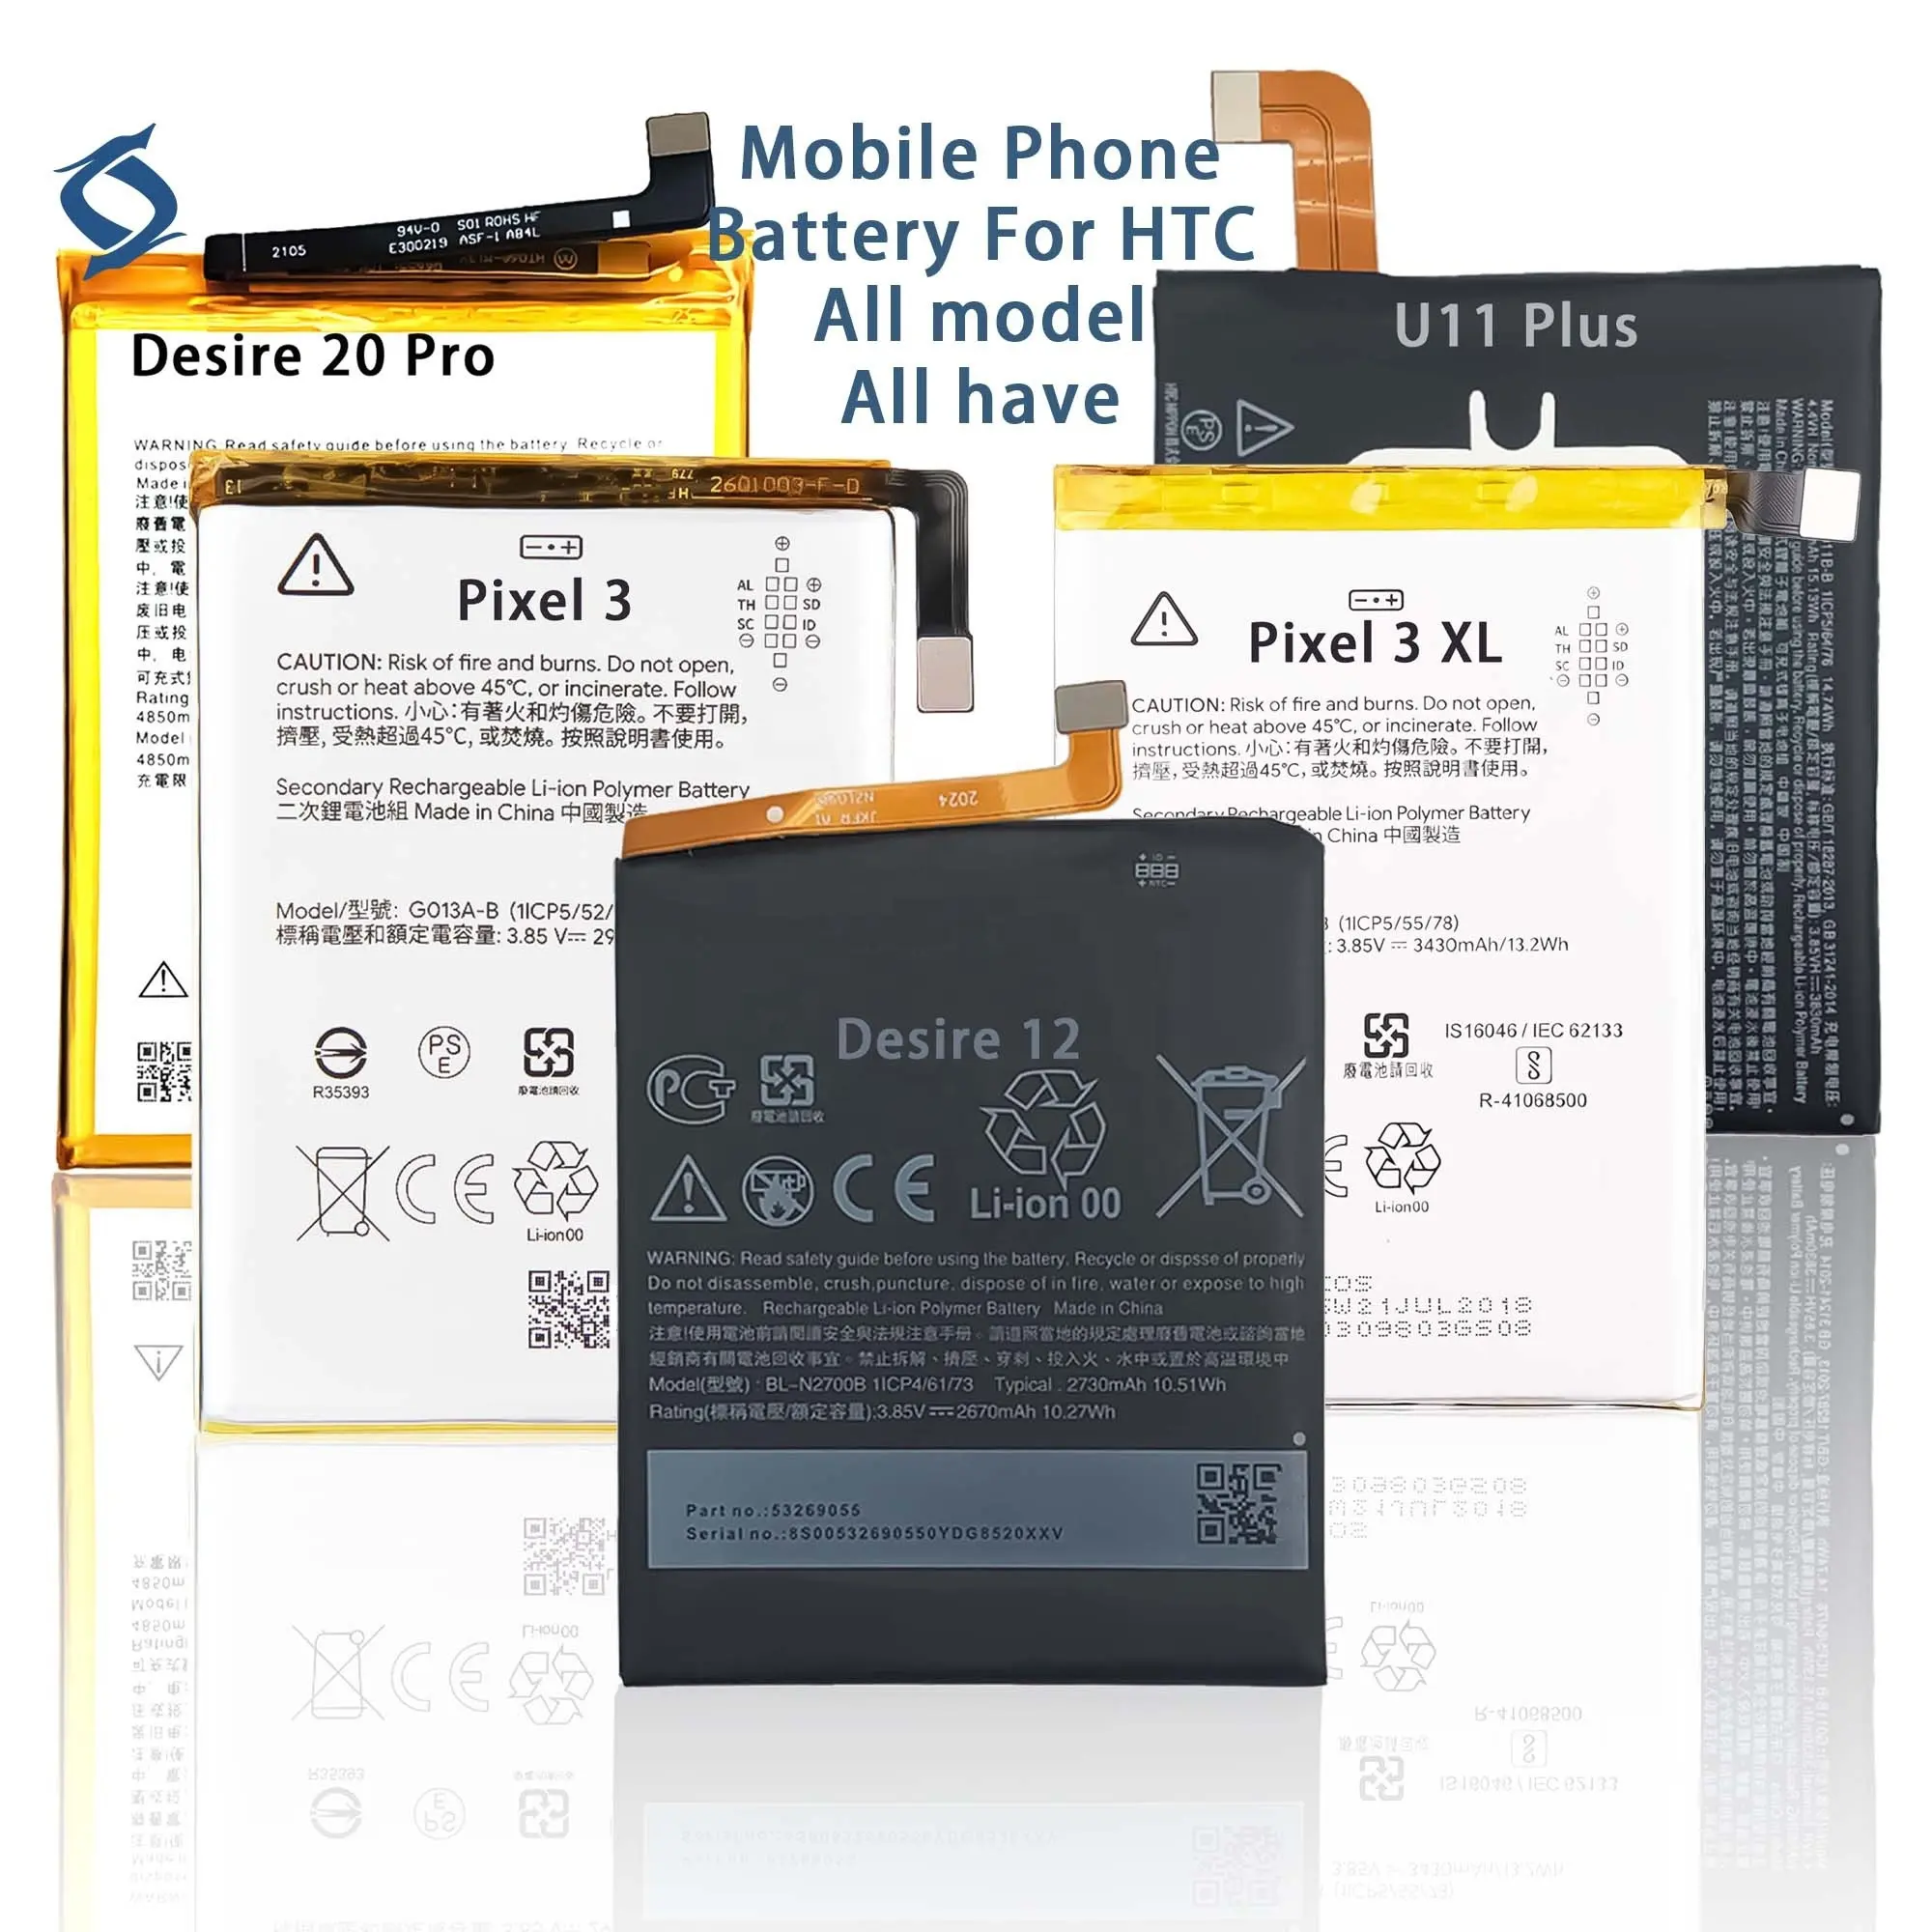 Factory direct supply M7 M8 M9 E8 Pixel 2 XL mobile phone Battery For HTC D816 D820 D830 D728 U11 U12 Life OEM Jielin